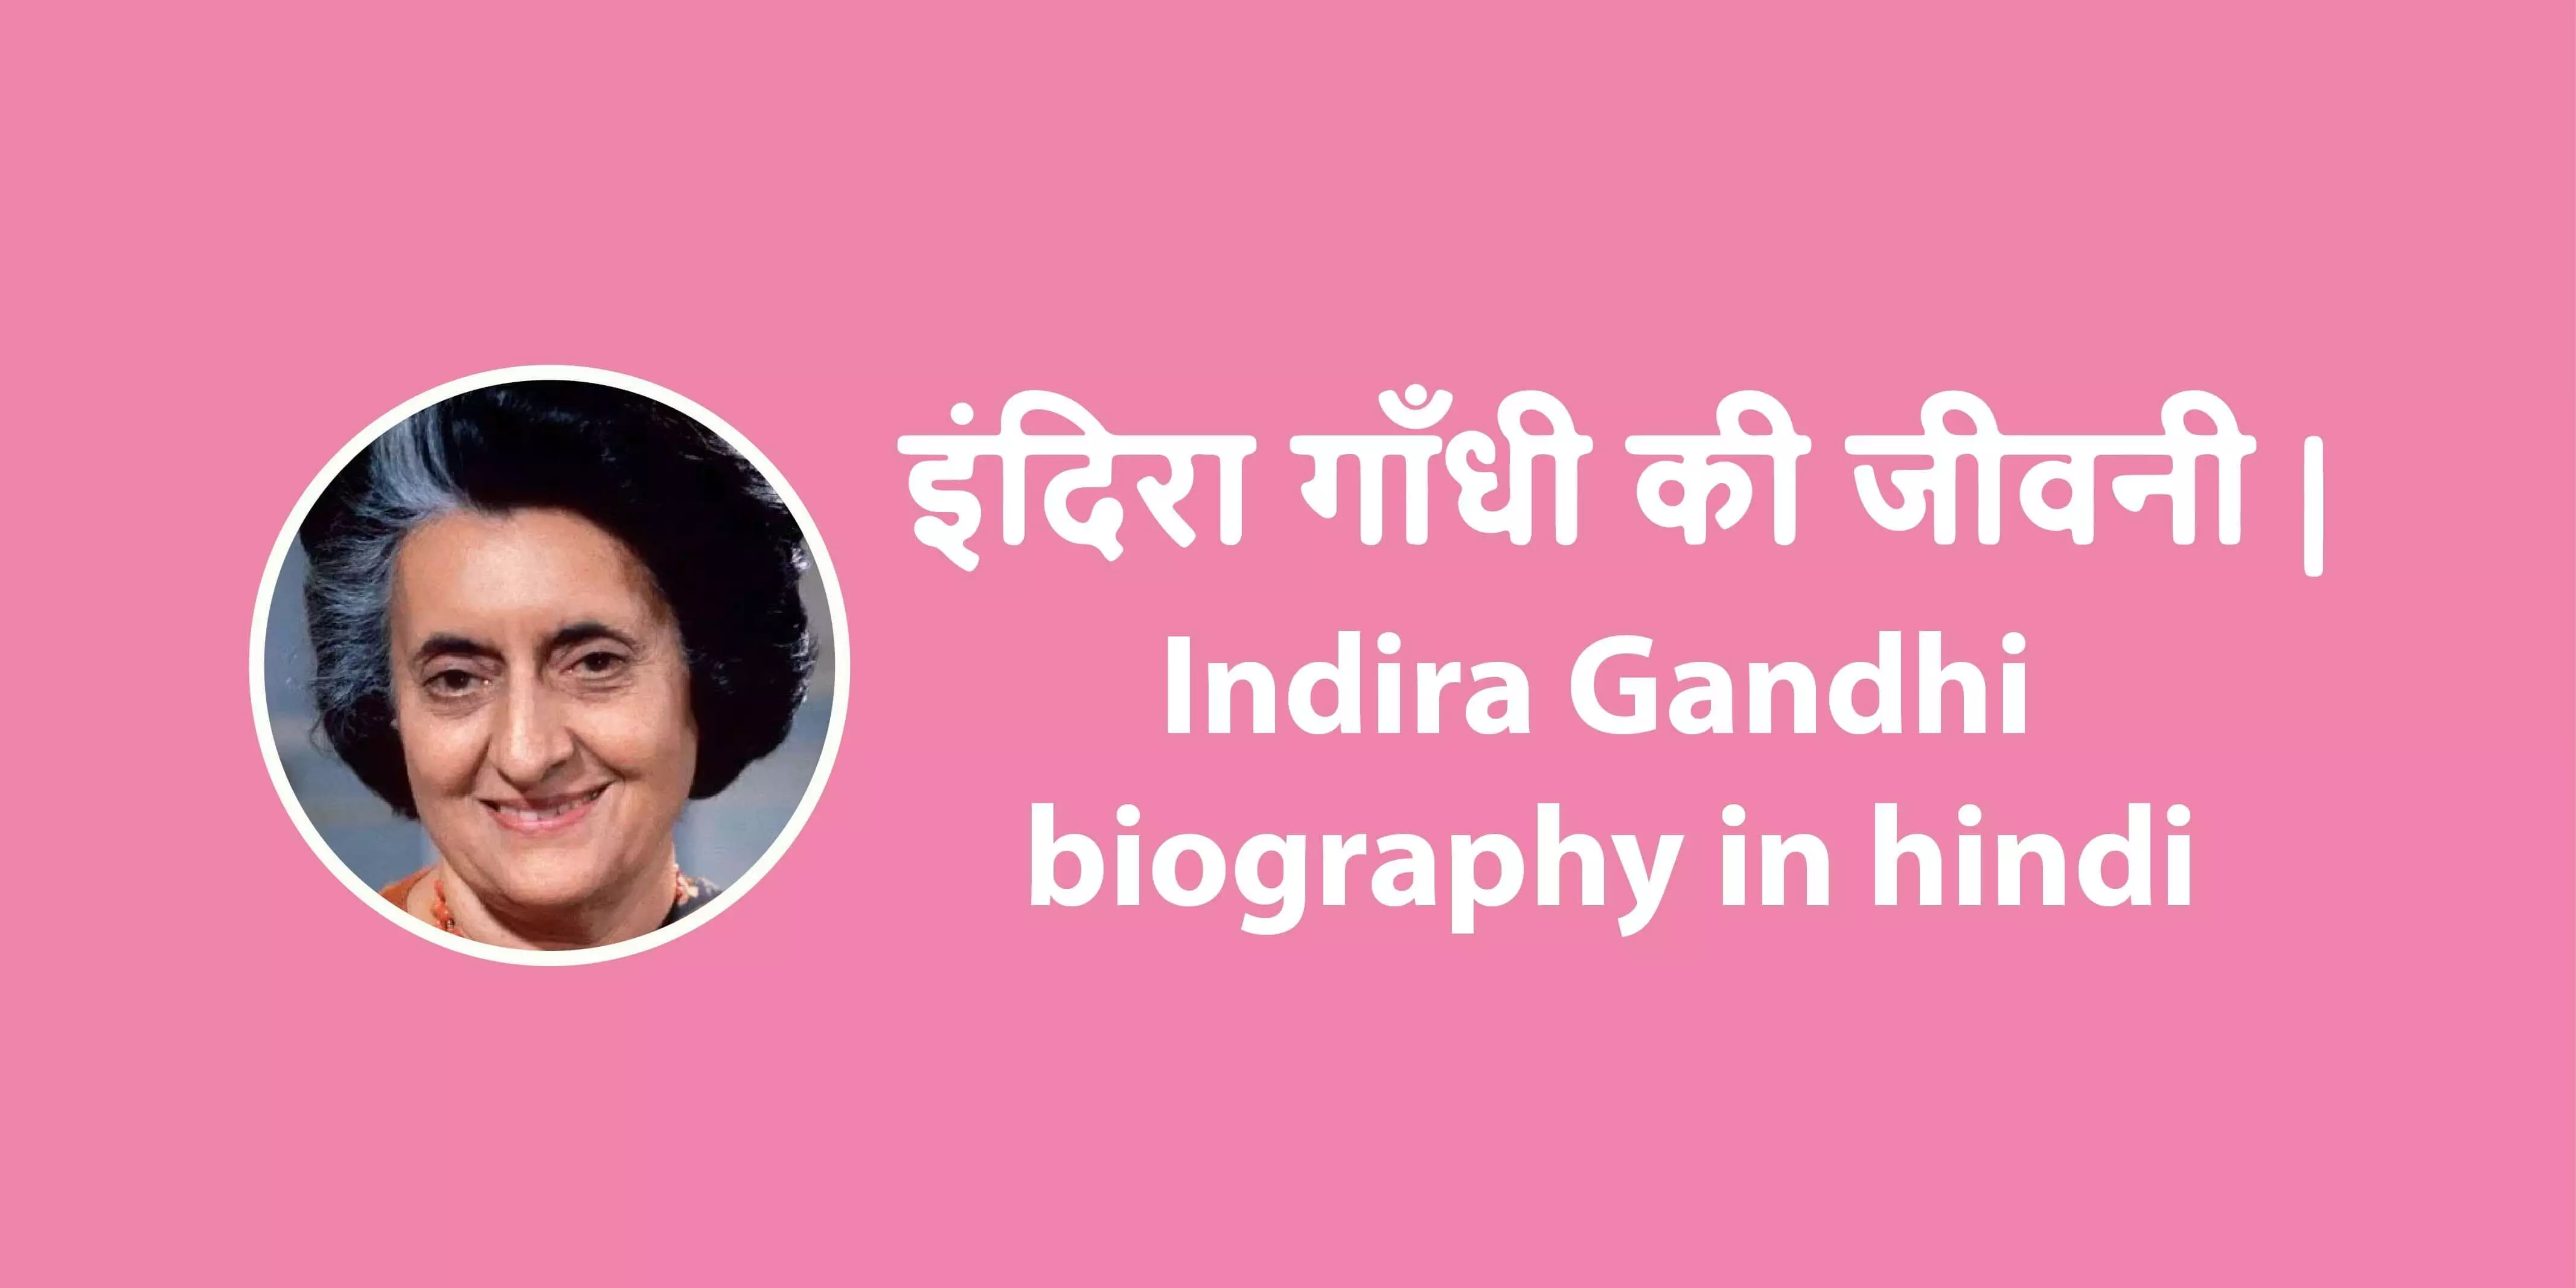 Indira Gandhi Biography In Hindi | इन्दिरा गाँधी का जीवन परिचय